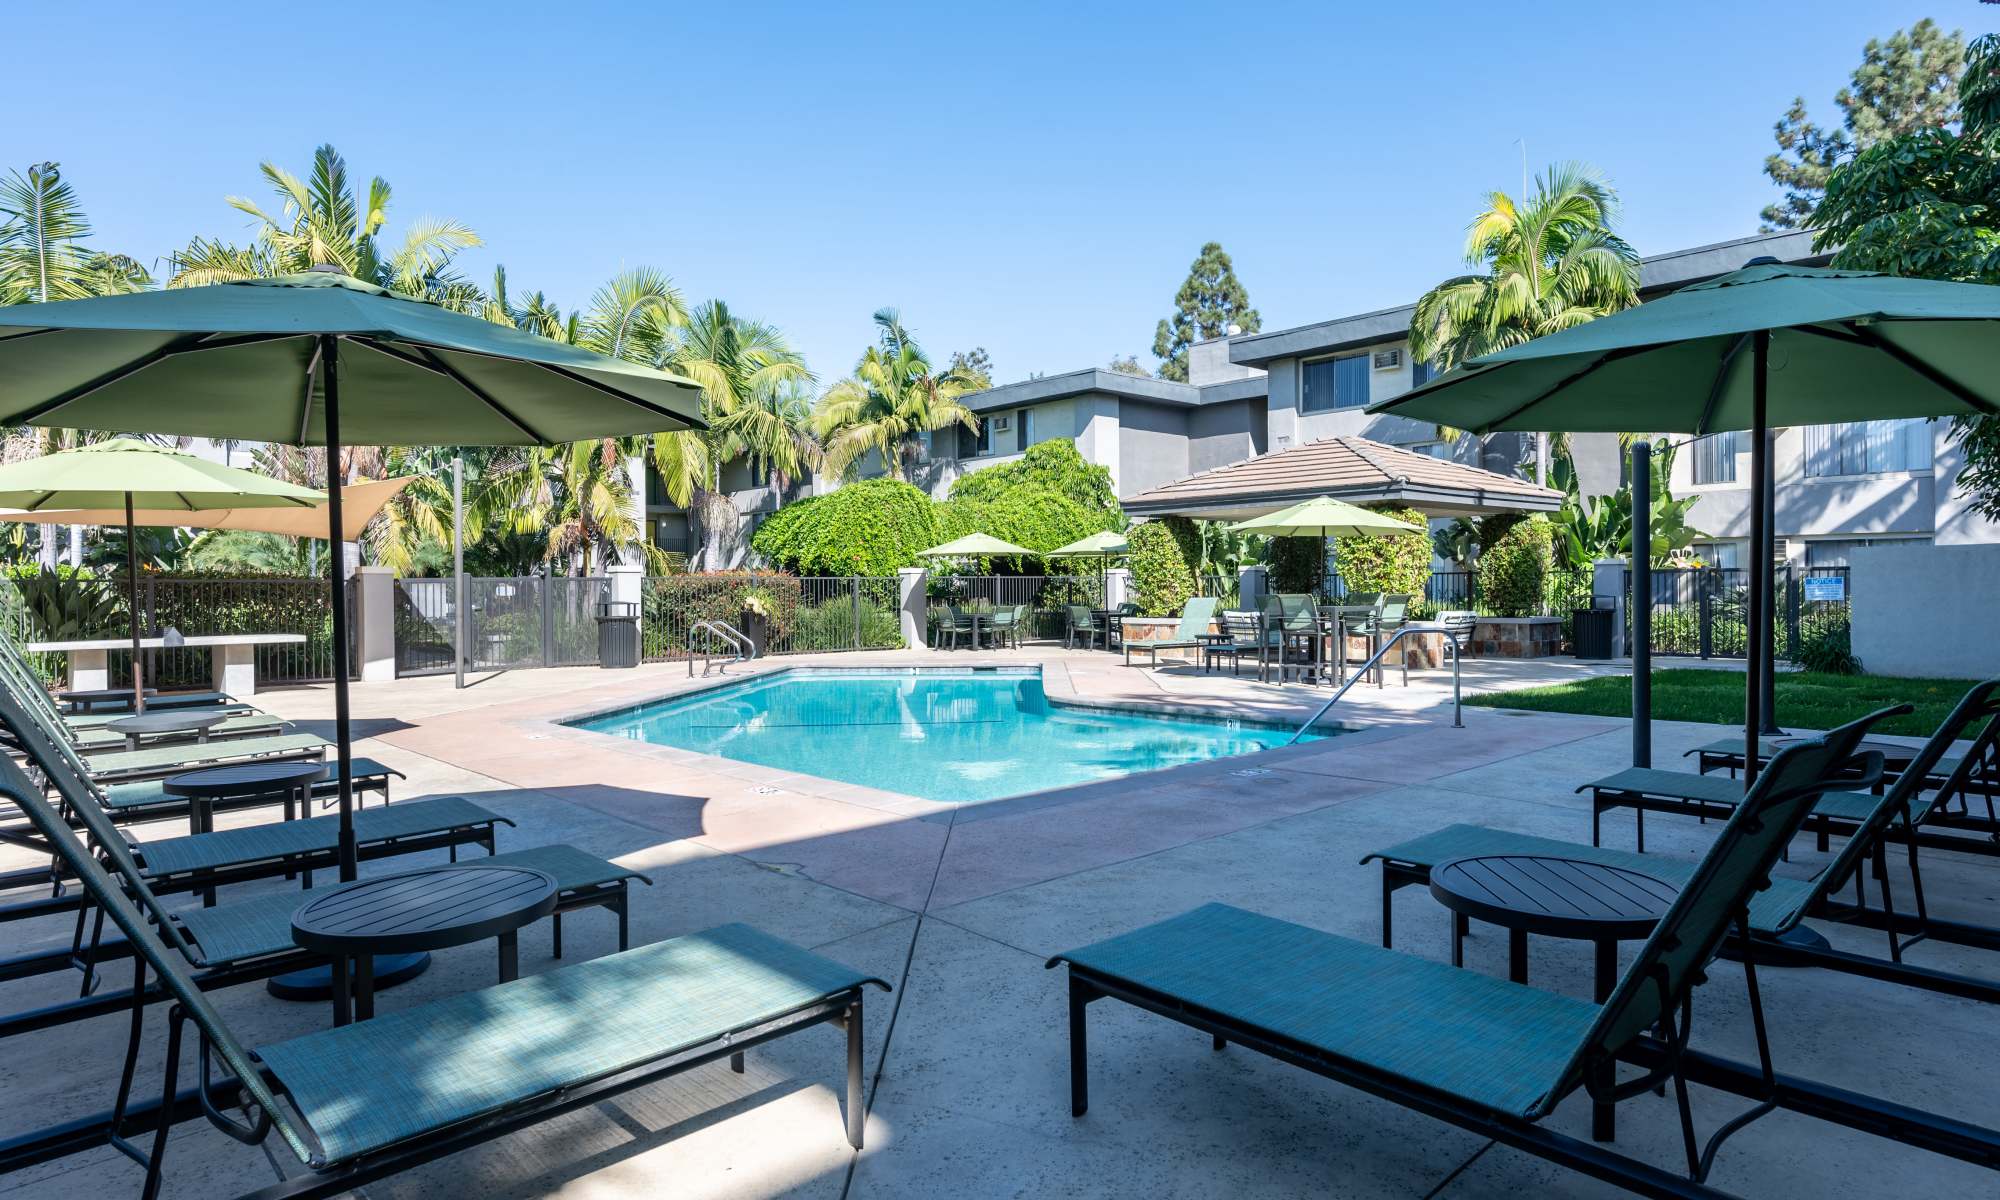 UCE Apartment Homes in Fullerton, California